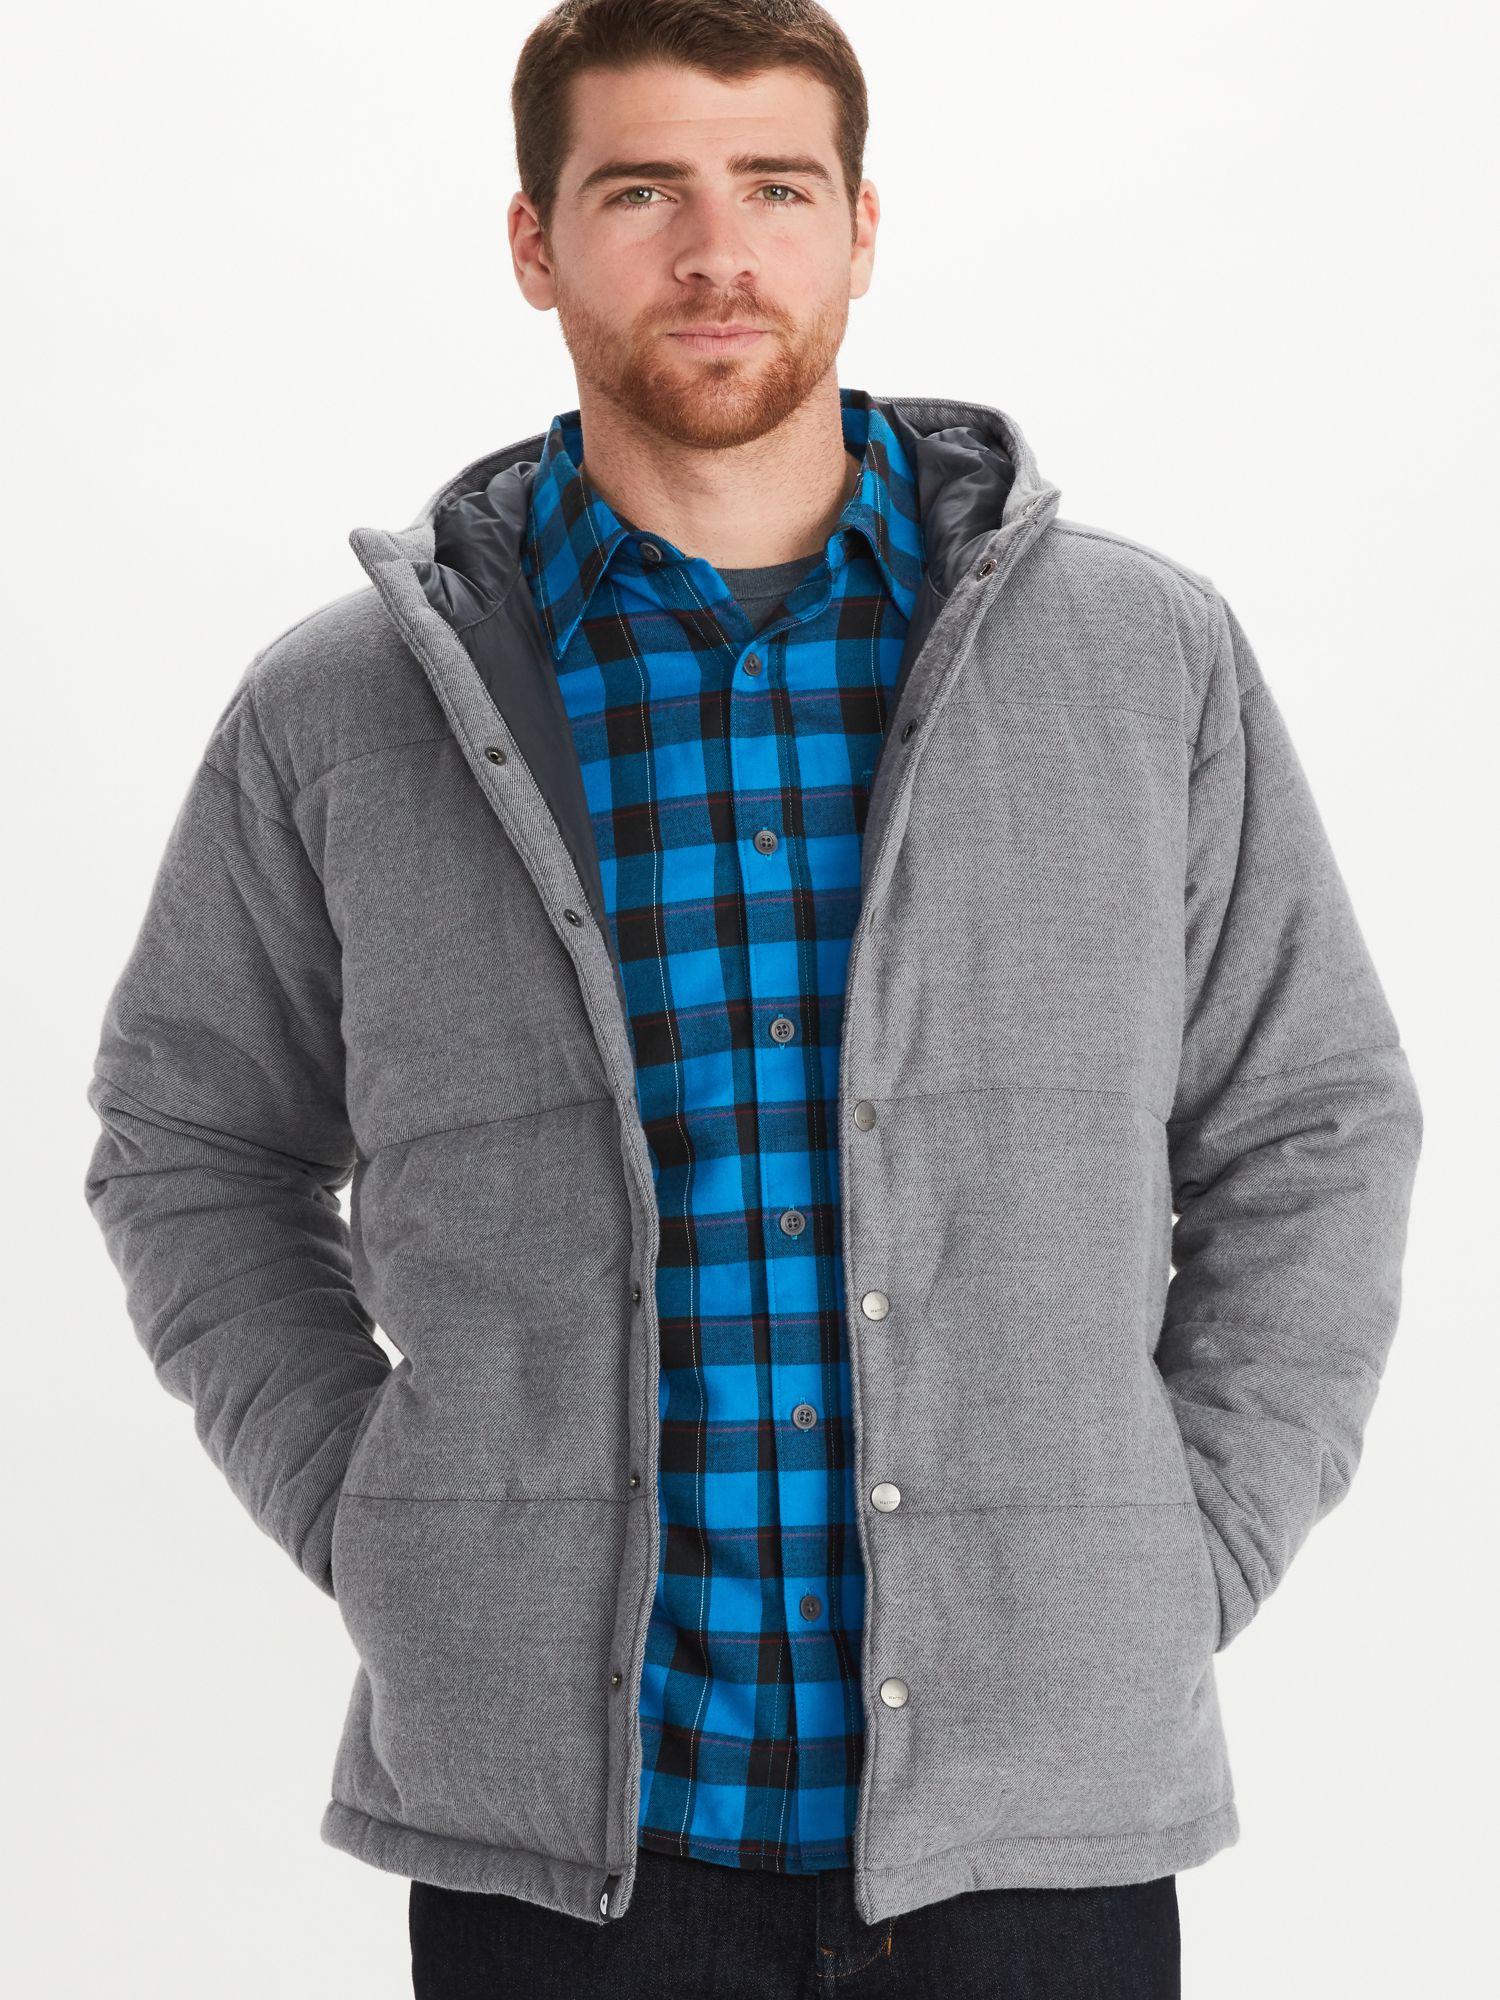 Men's Lanigan Insulated Long-Sleeve Flannel Hoody | Marmot